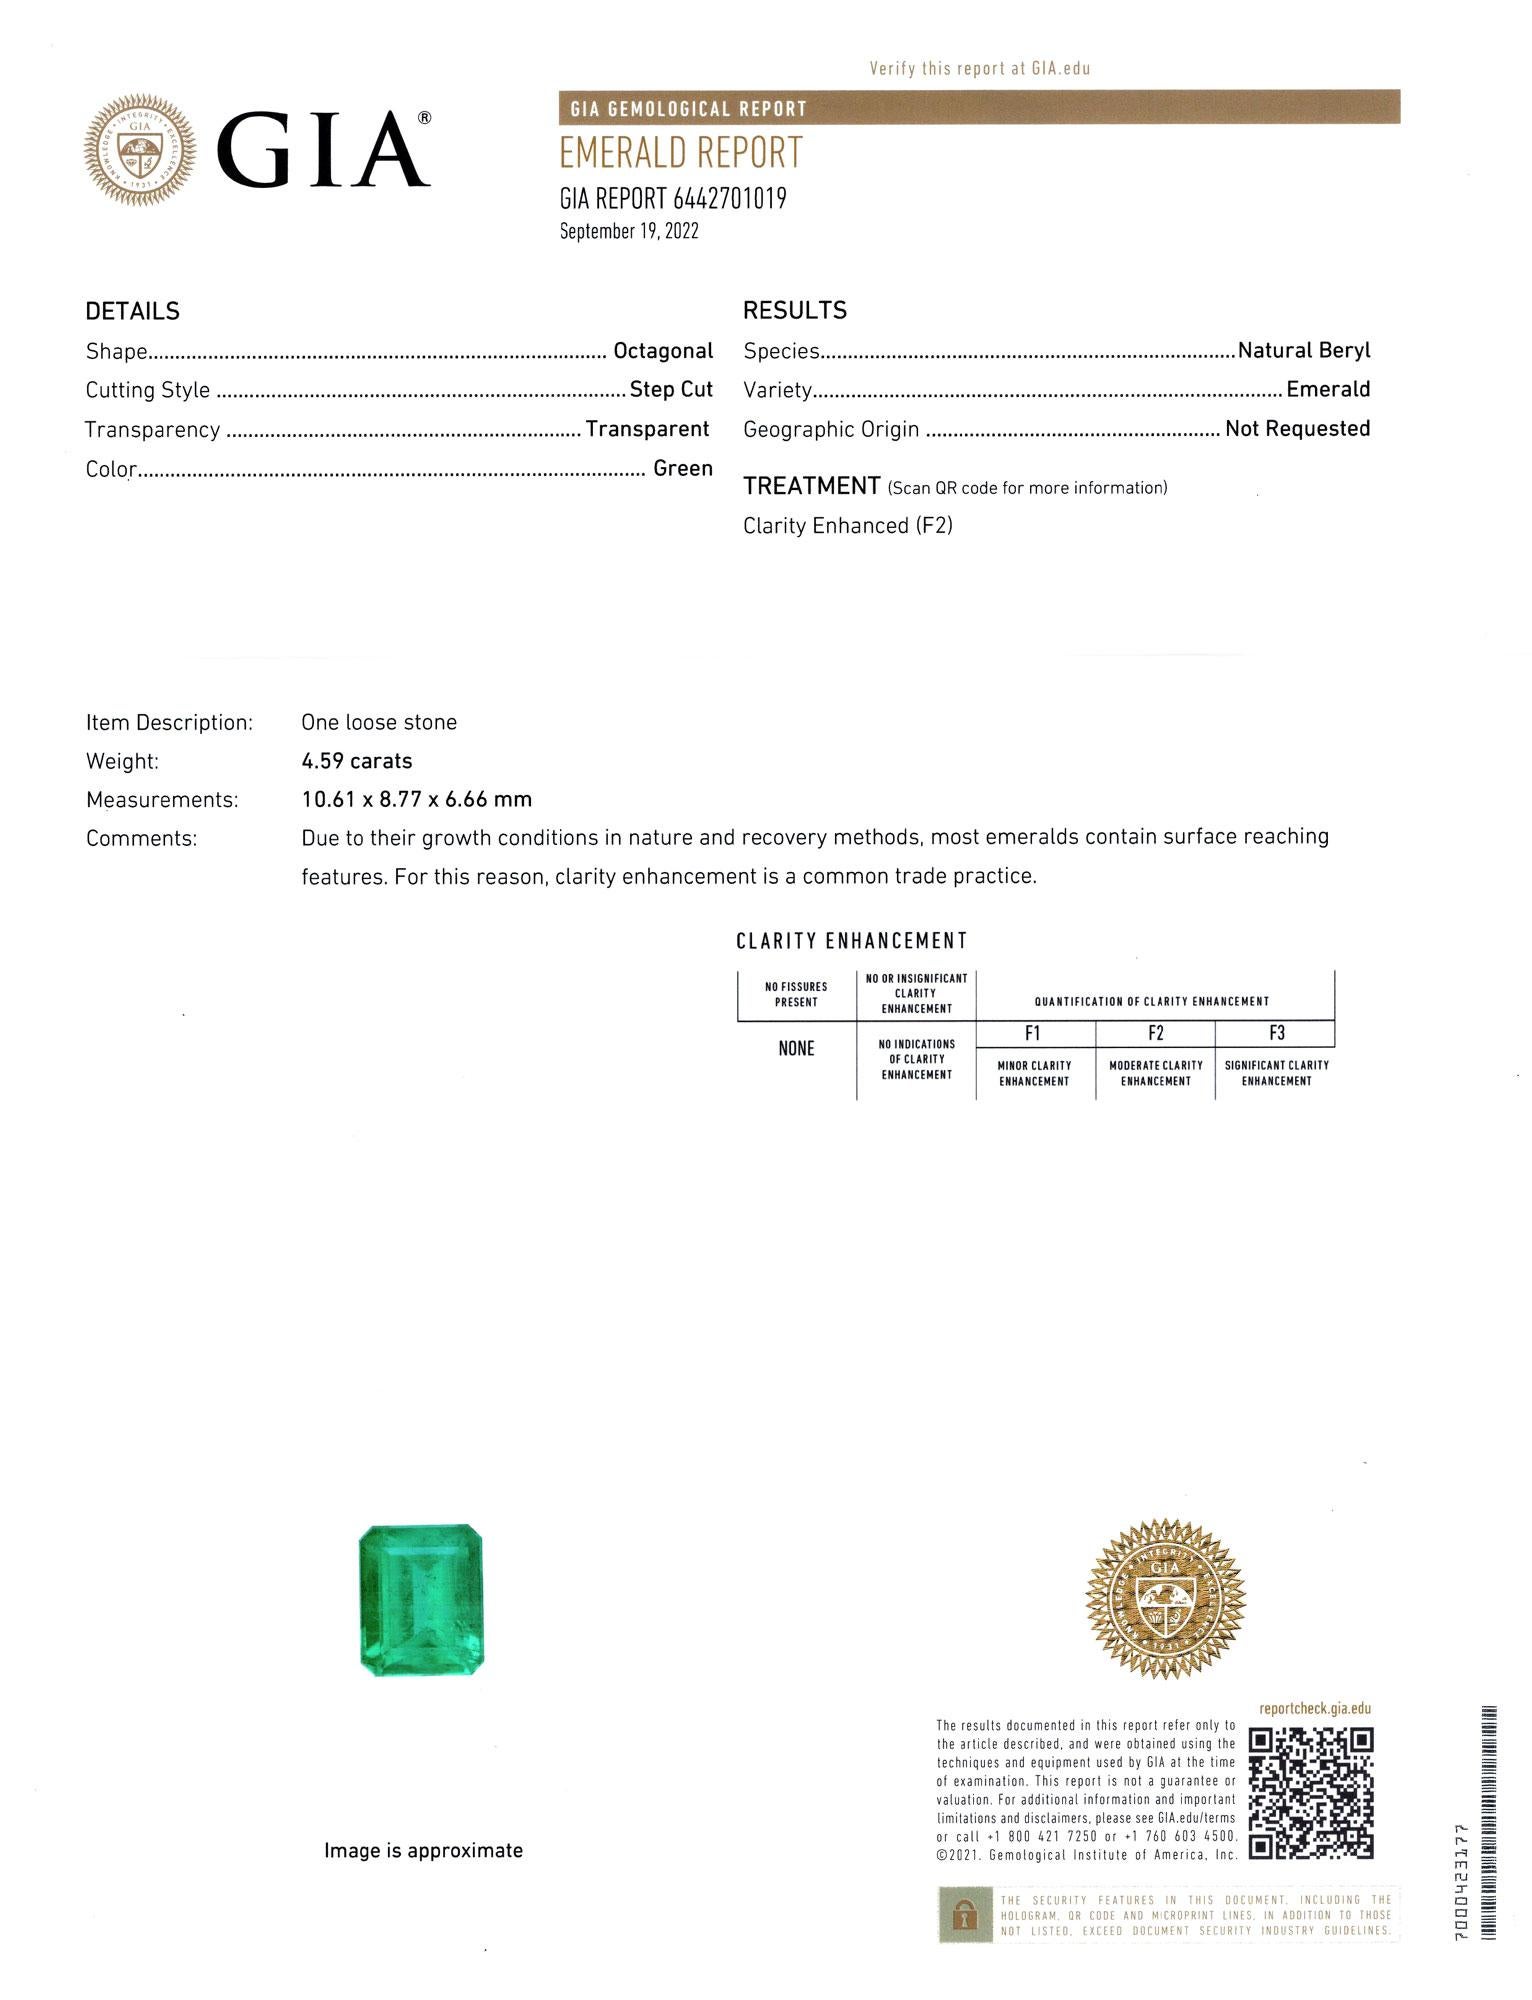 Emerald Cut GIA Certified 4.59 Carat Green Emerald Diamond Ring COLOMBIAN ORIGIN For Sale